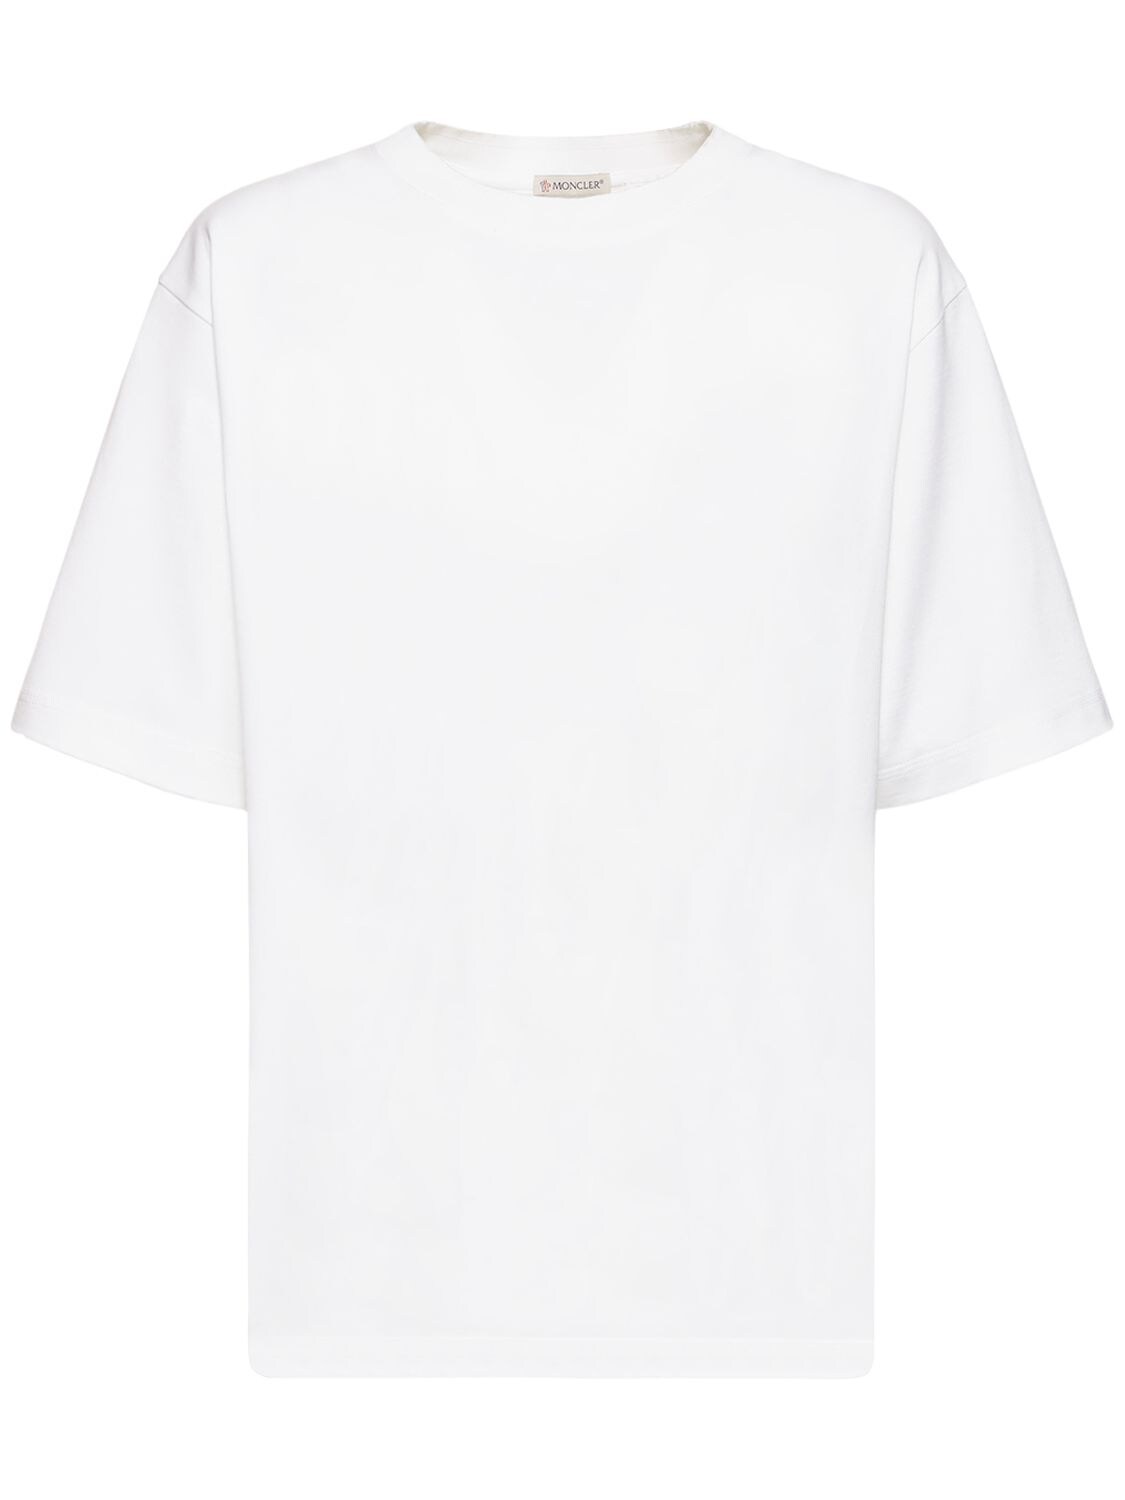 Alicia Keys Printed Cotton T-shirt – WOMEN > CLOTHING > T-SHIRTS